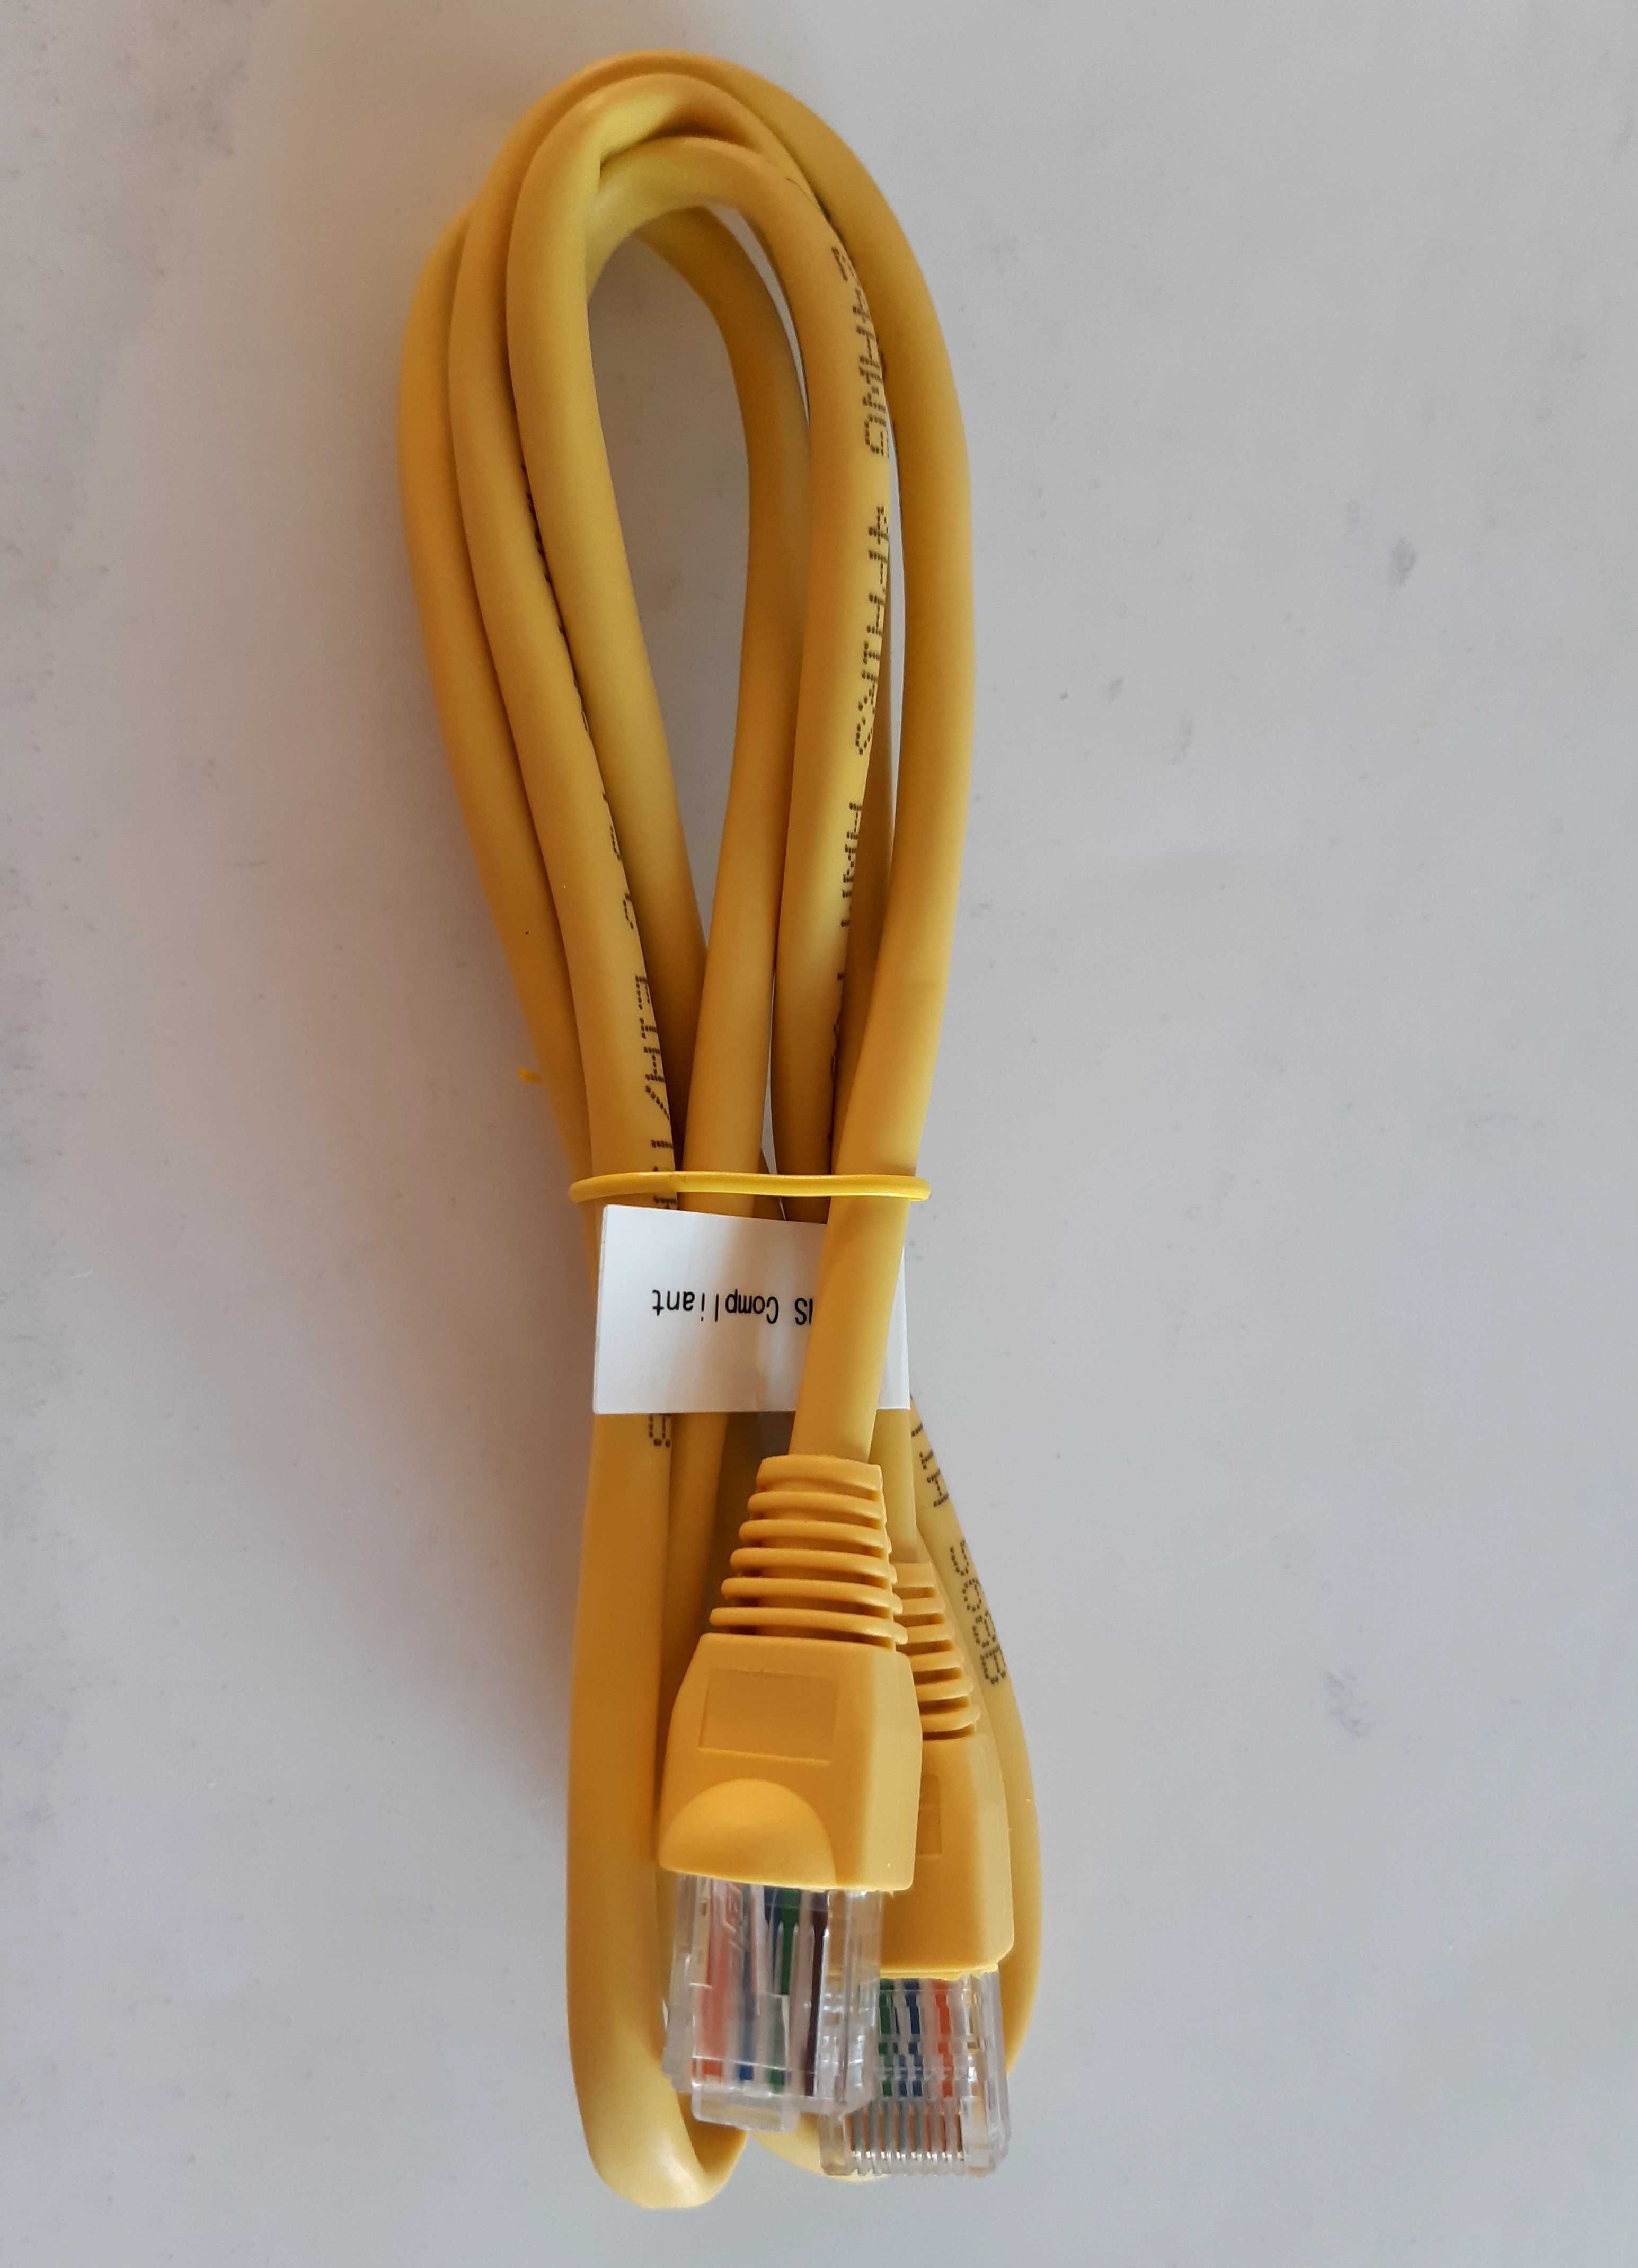 Kabel Internetowy Router-Komputer 1,2 m kabel krosowy Toruń ruter